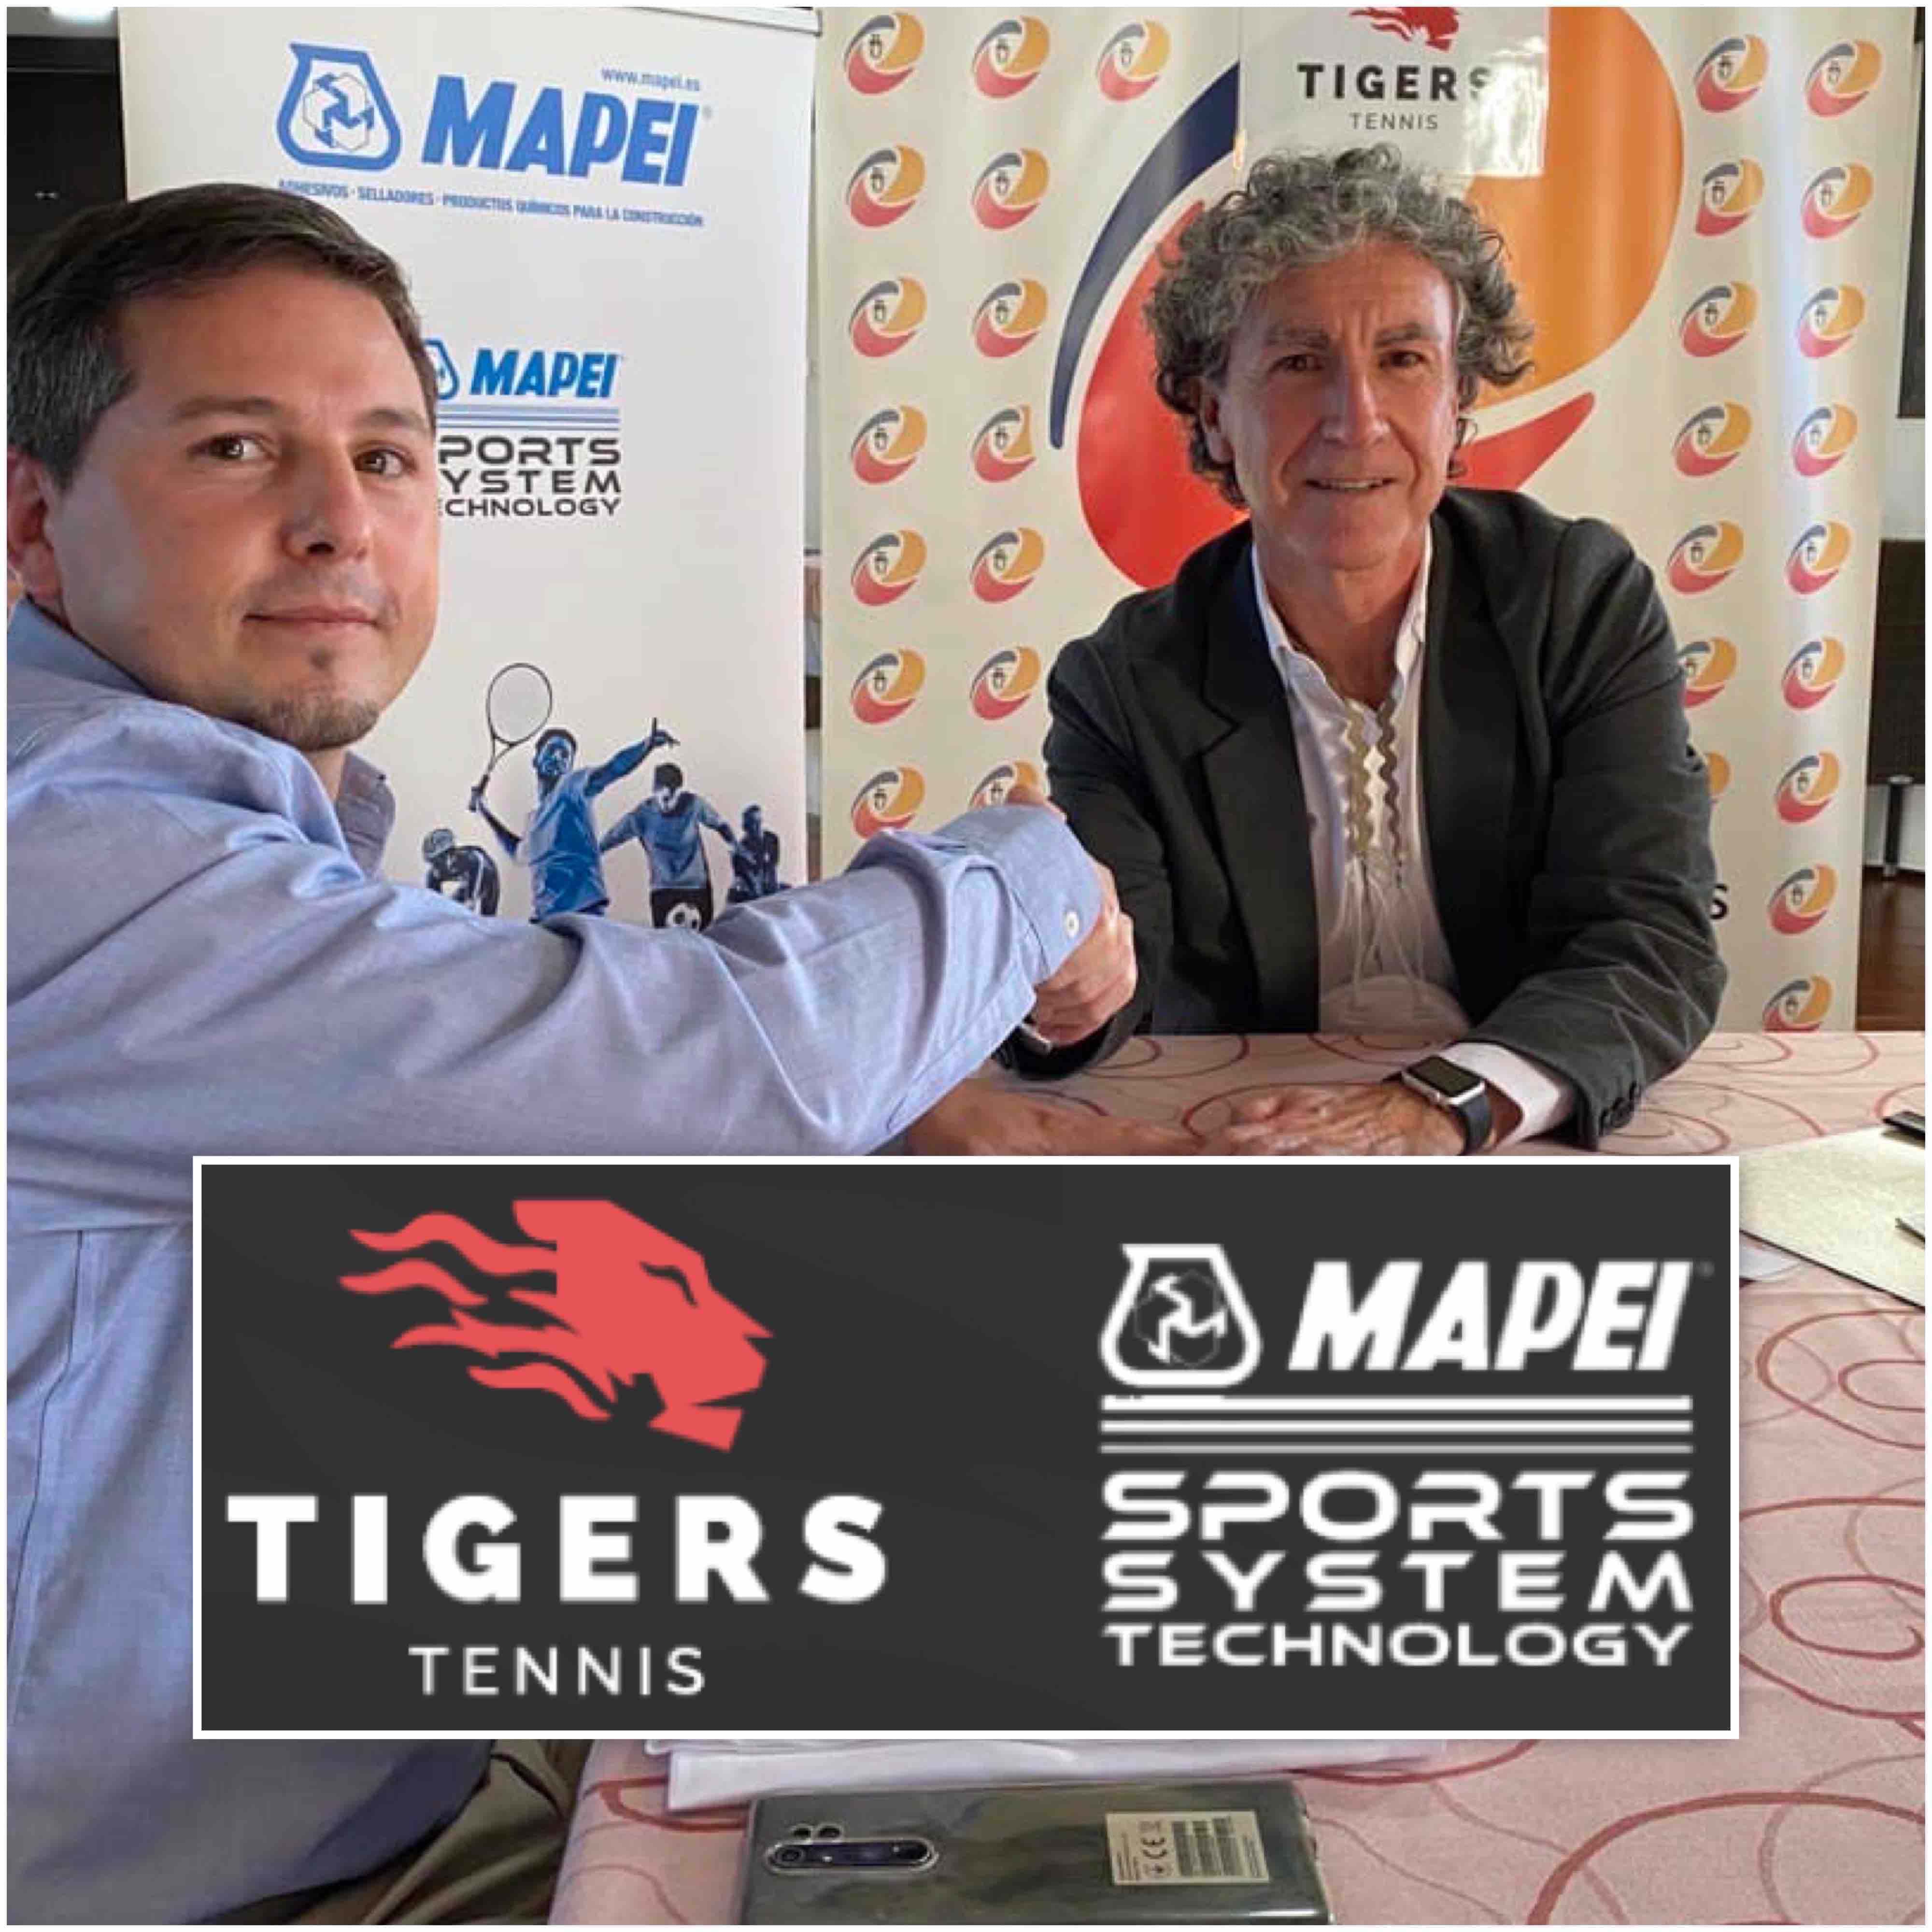 Mapei patrocina Tigers Tennis